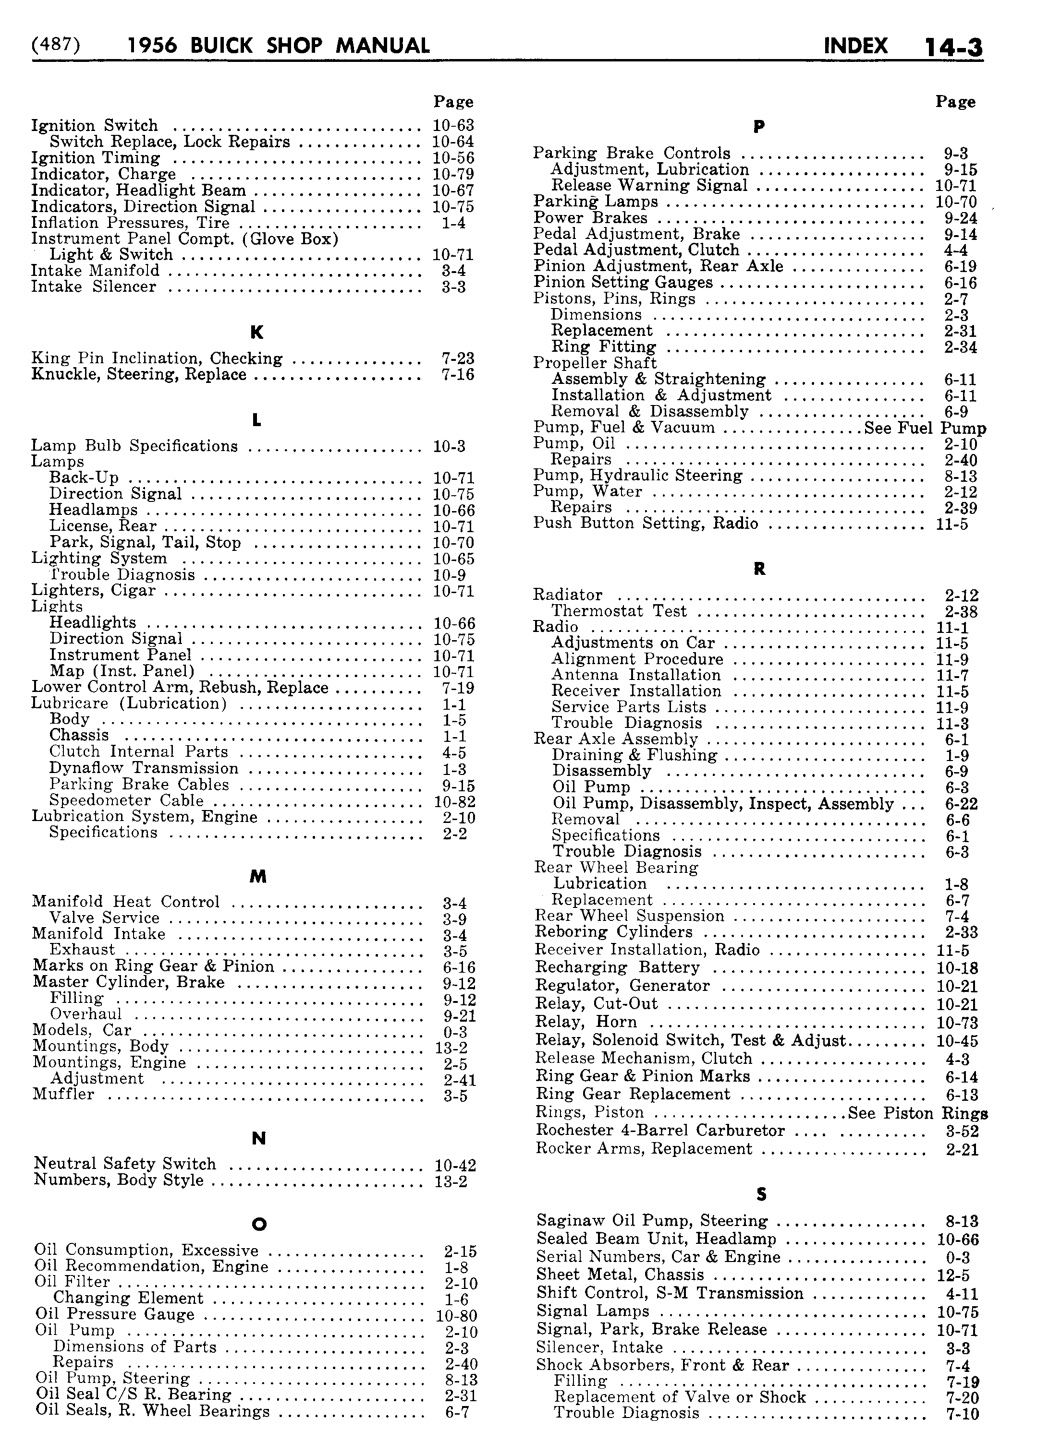 n_15 1956 Buick Shop Manual - Index-003-003.jpg